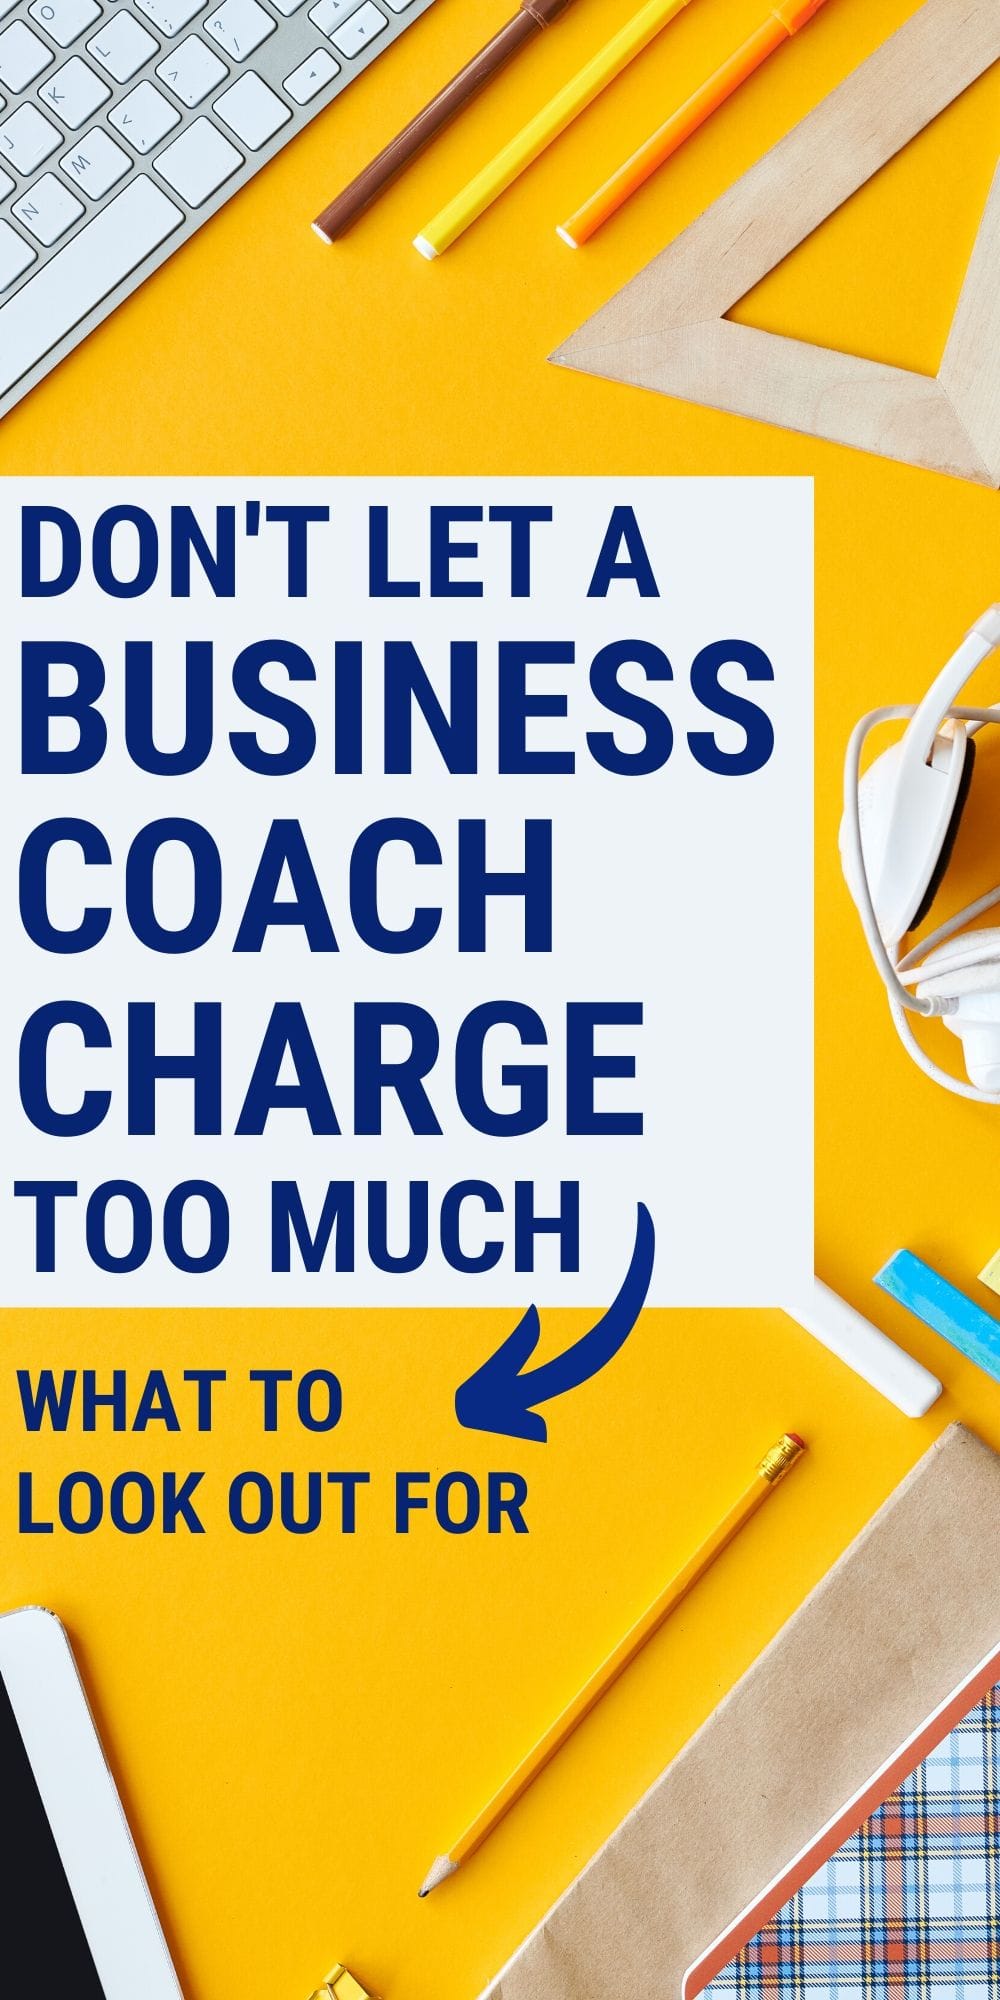 Arriba 72+ imagen business coach cost